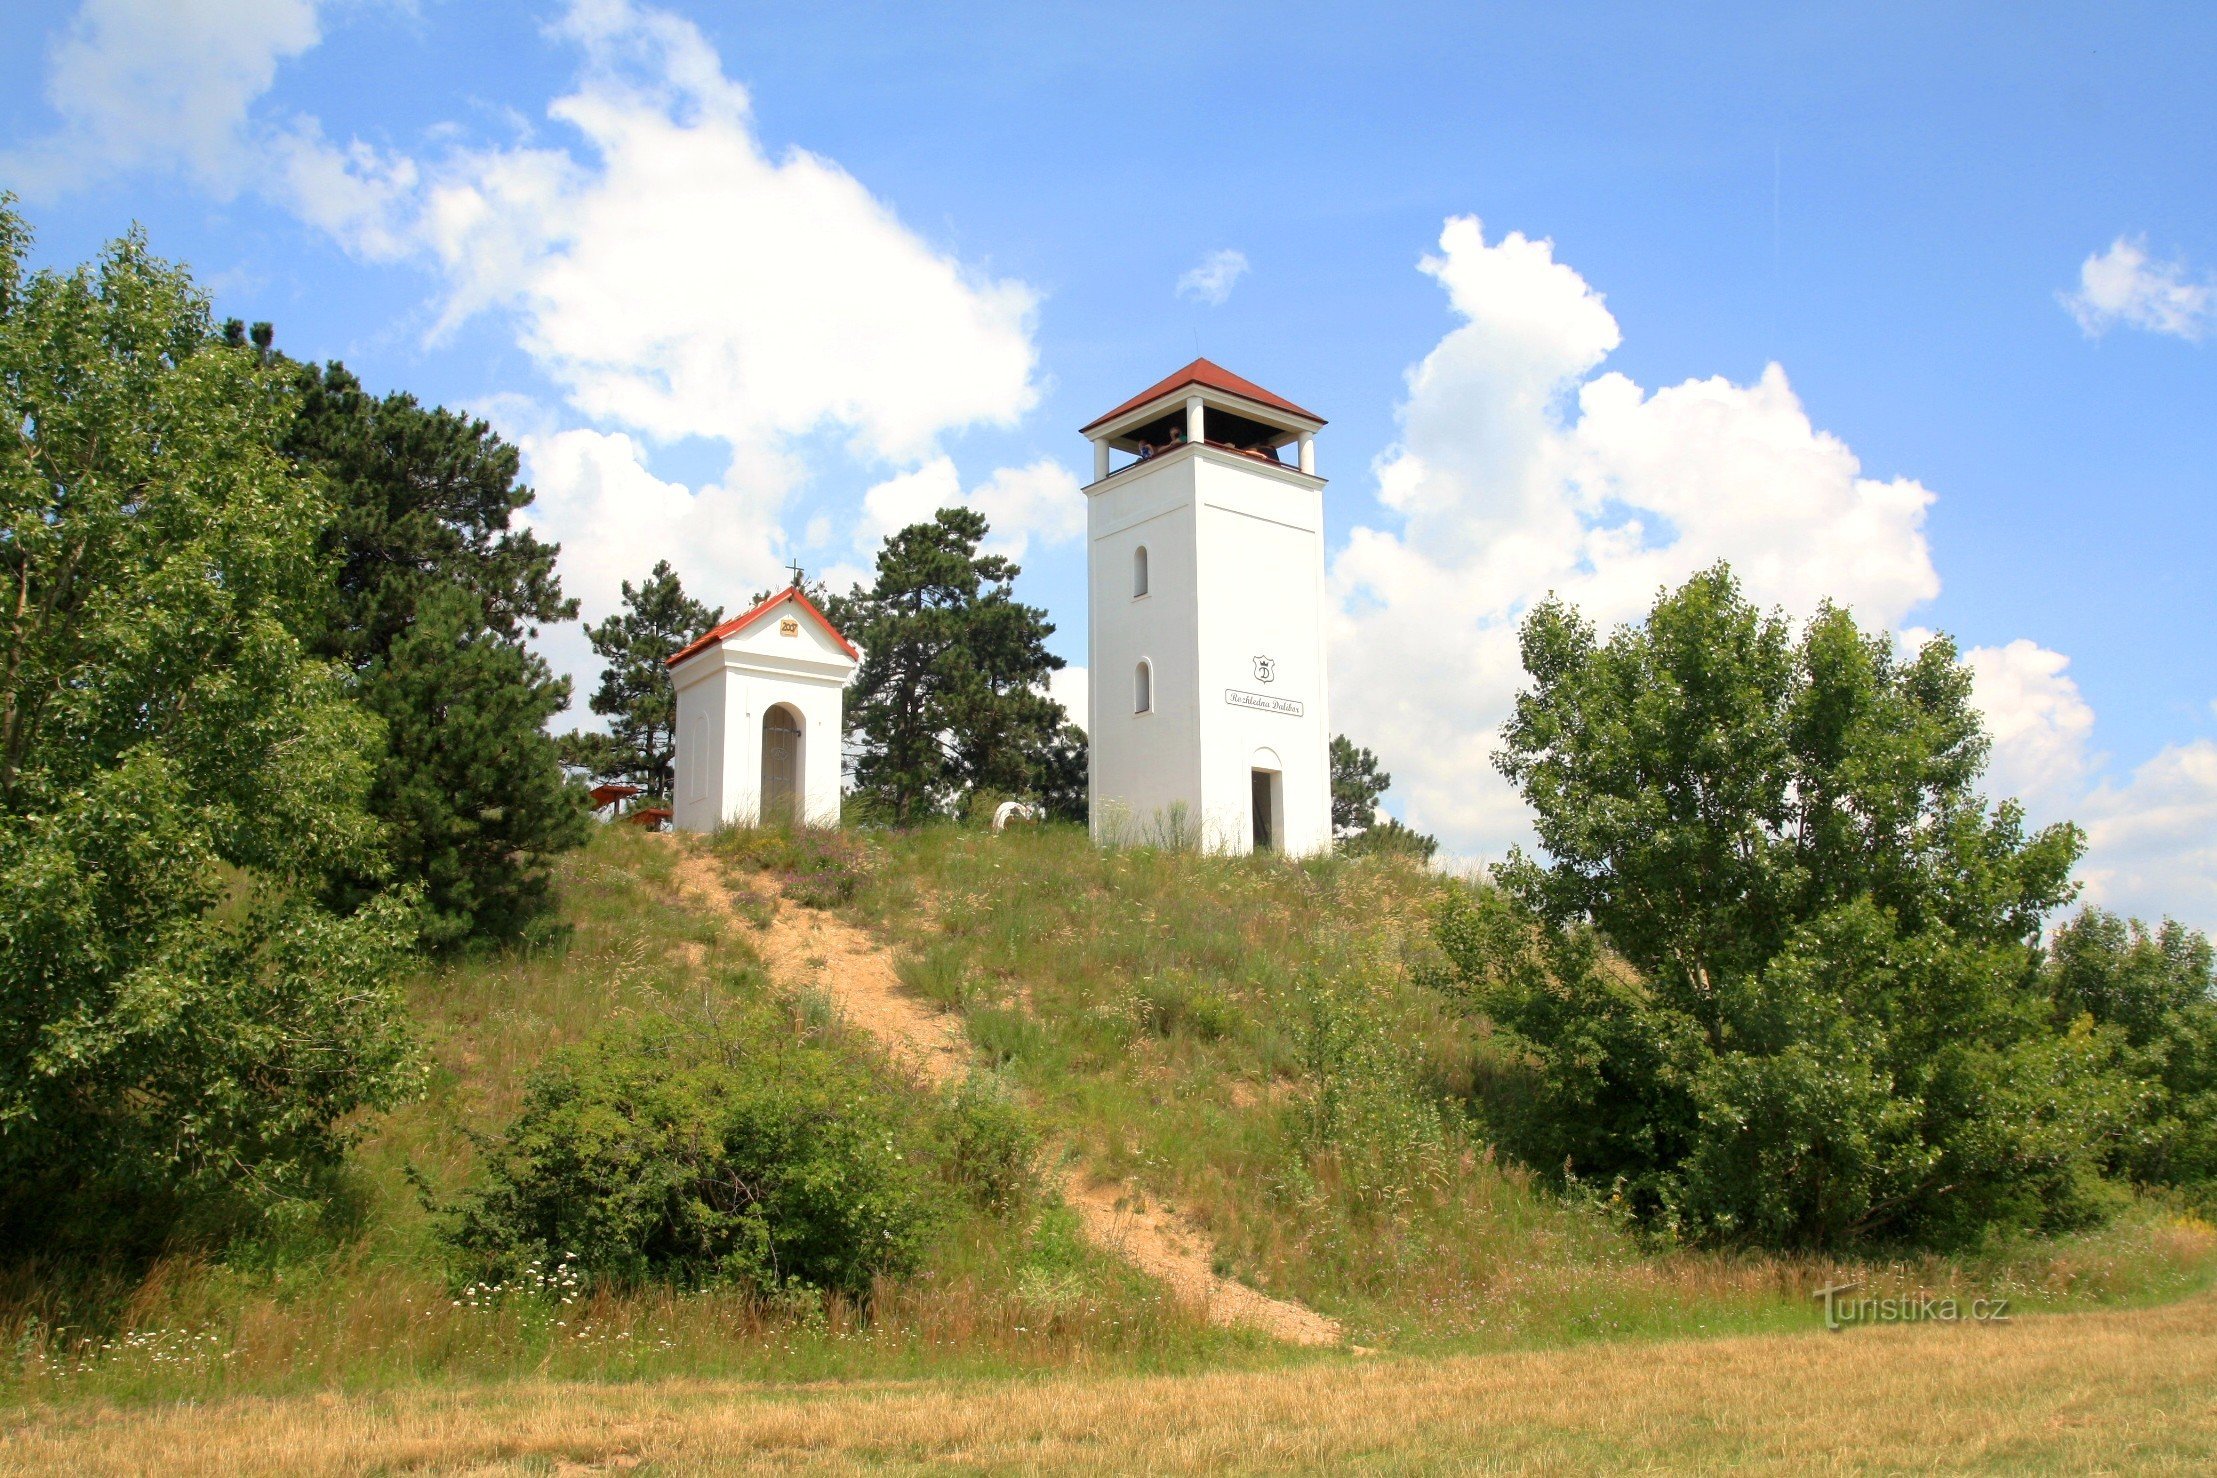 Toppen av Golgata med kapellet St. Urbana och Dalibors utsiktstorn